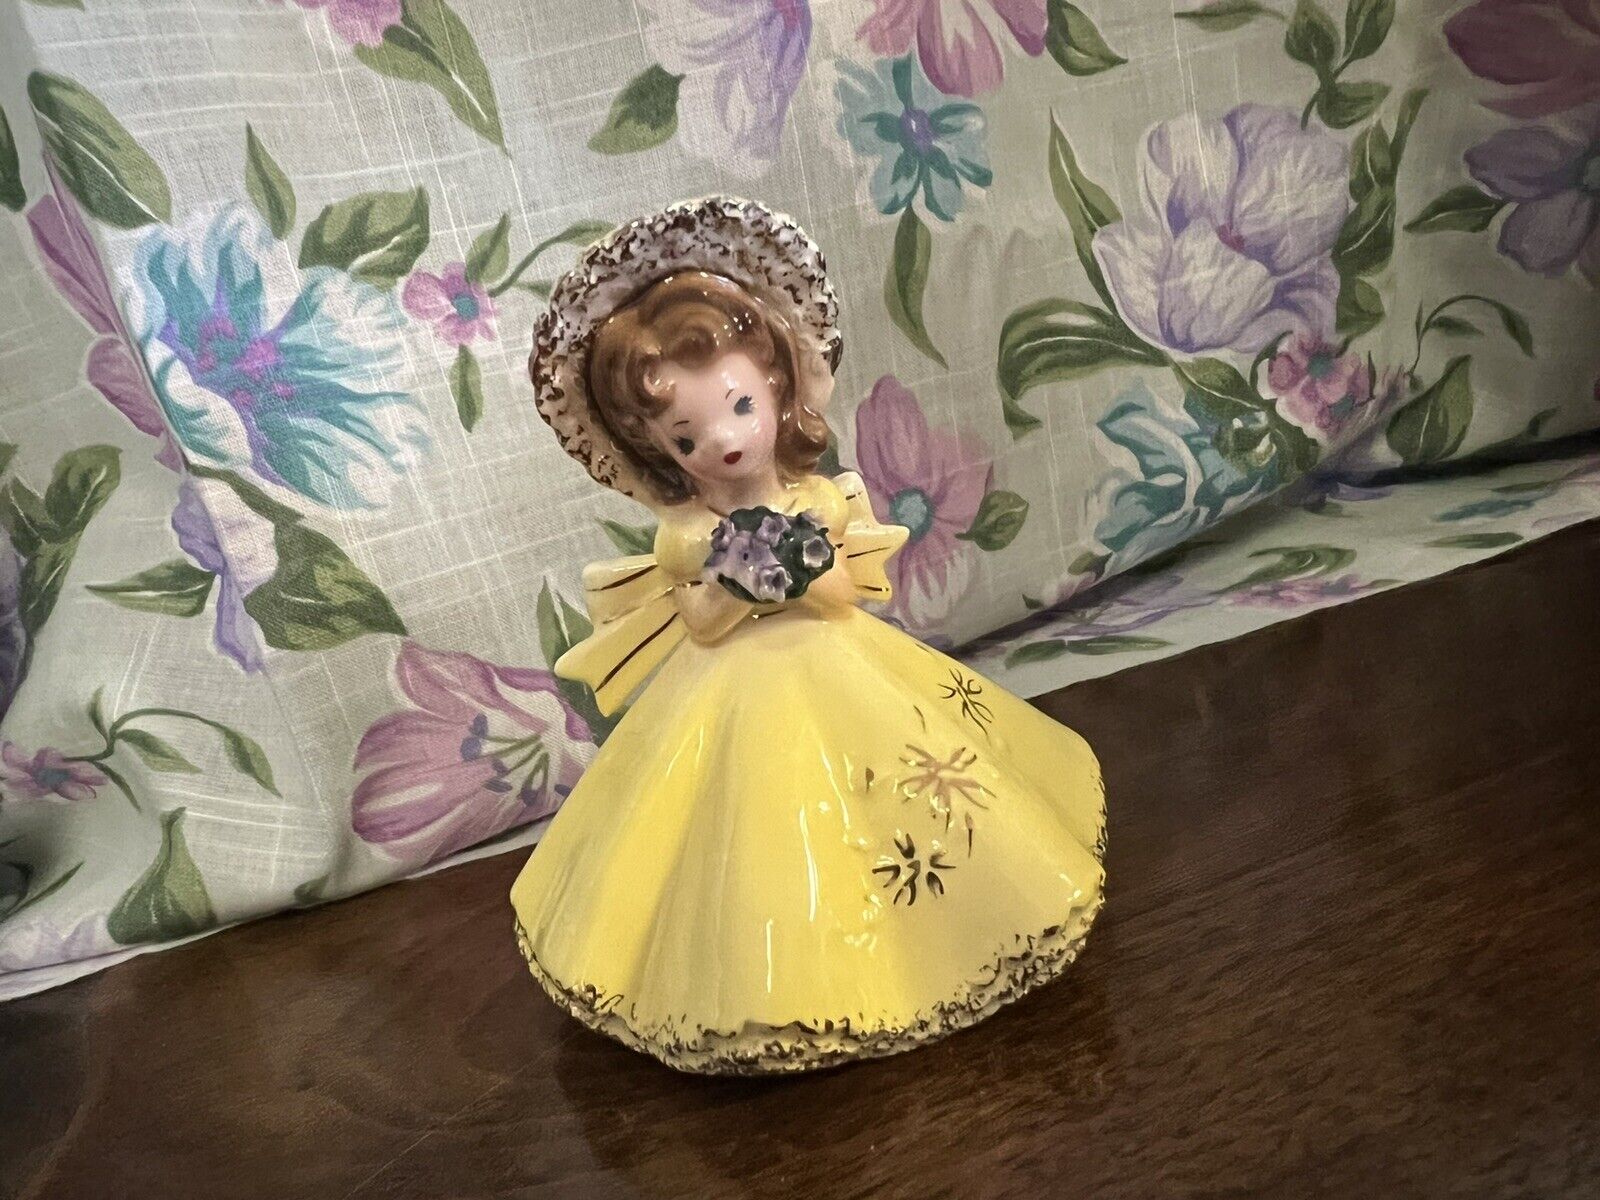 Vintage Josef Originals August Figurine Girl Yellow Dress Flowers Bonnet 